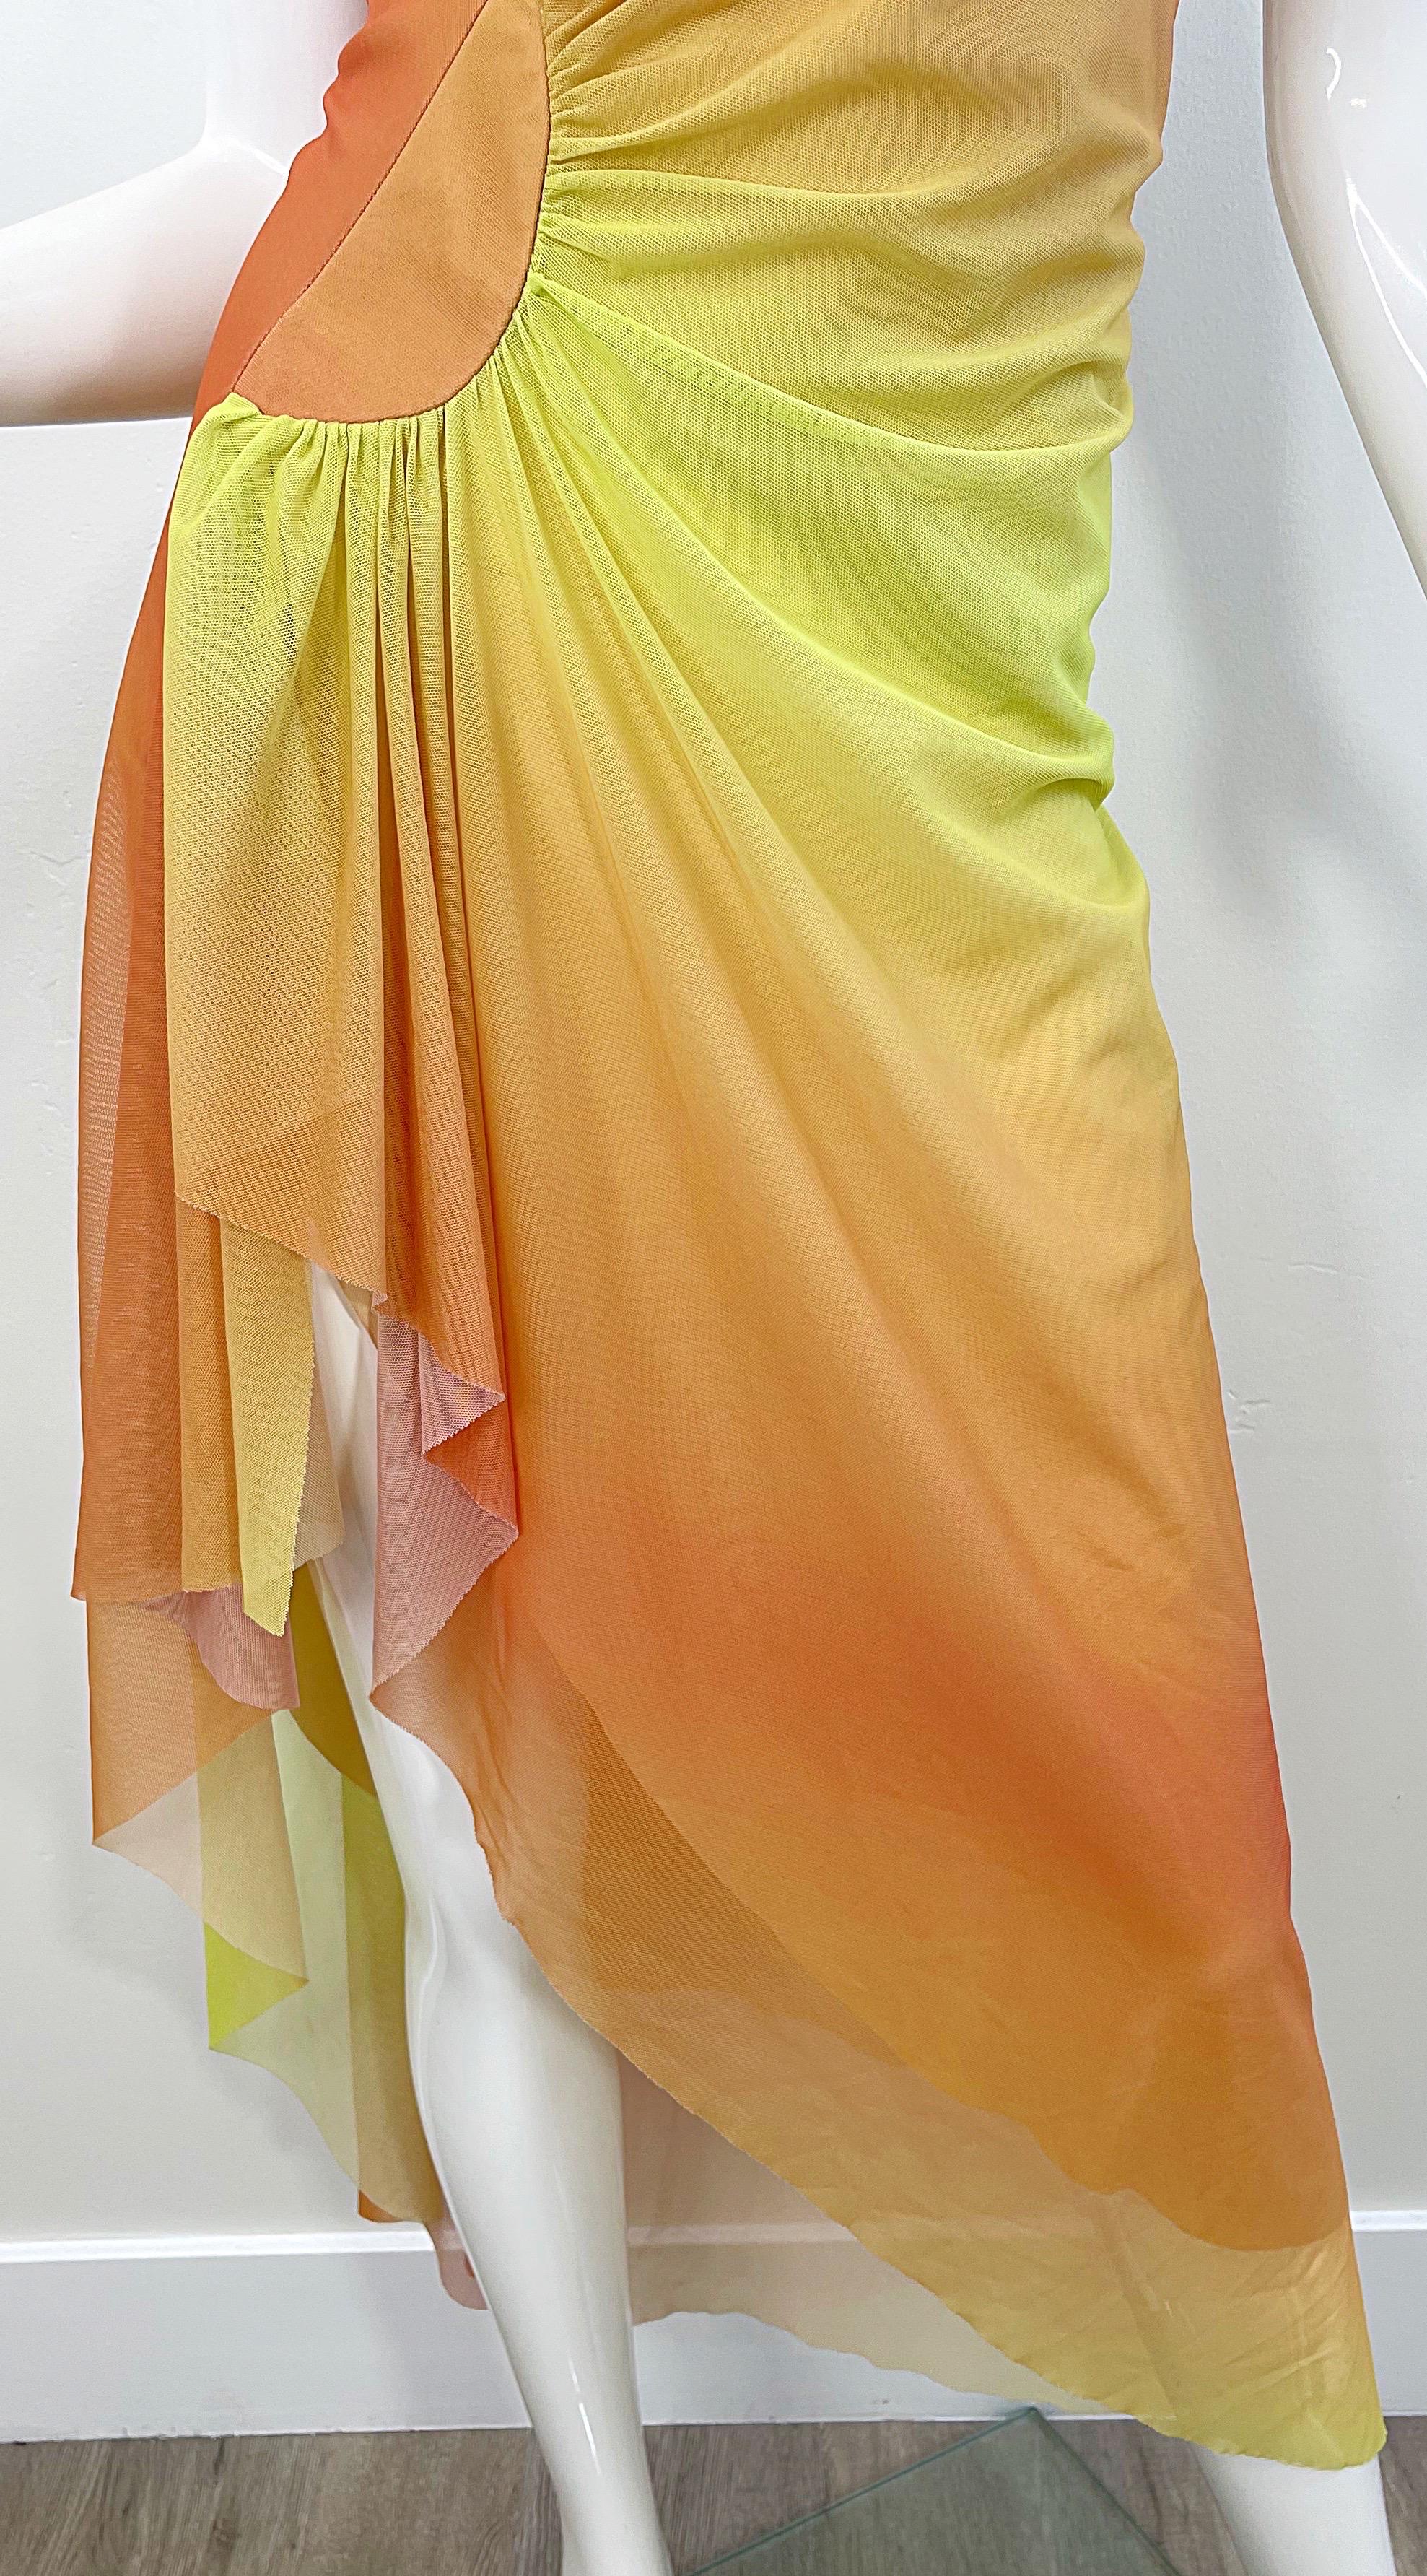 Ema Savahl 2000s Hand Dyed Ombré Orange Yellow Sexy Hi-Lo Halter Dress Y2K For Sale 2